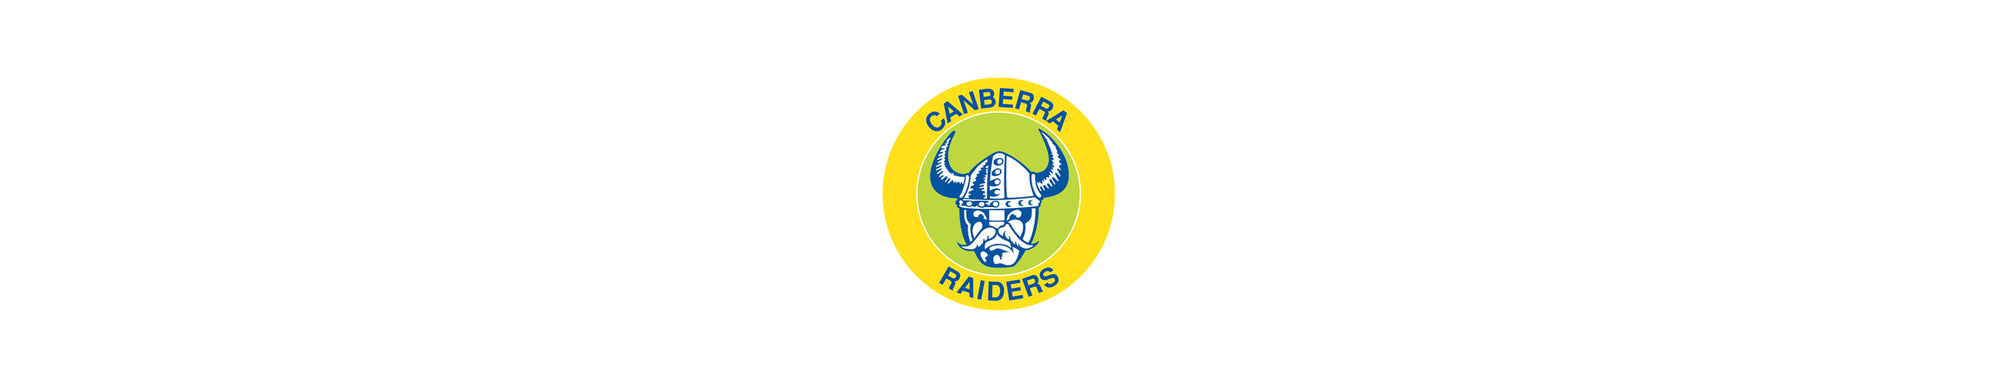 Retro Canberra Raiders